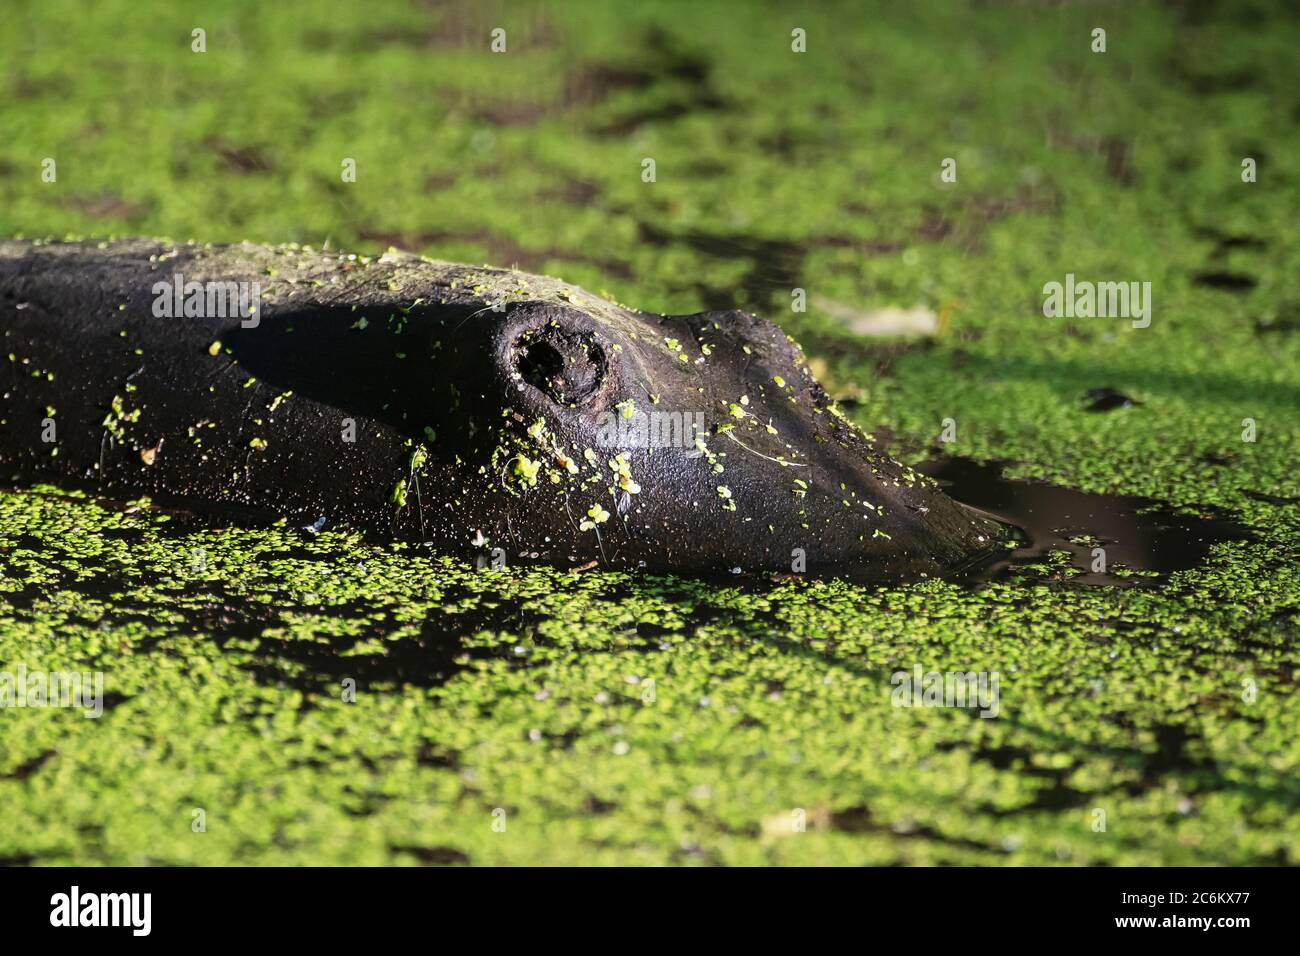 Alligator-log look alike floating on duck-weed covered pond Stock Photo